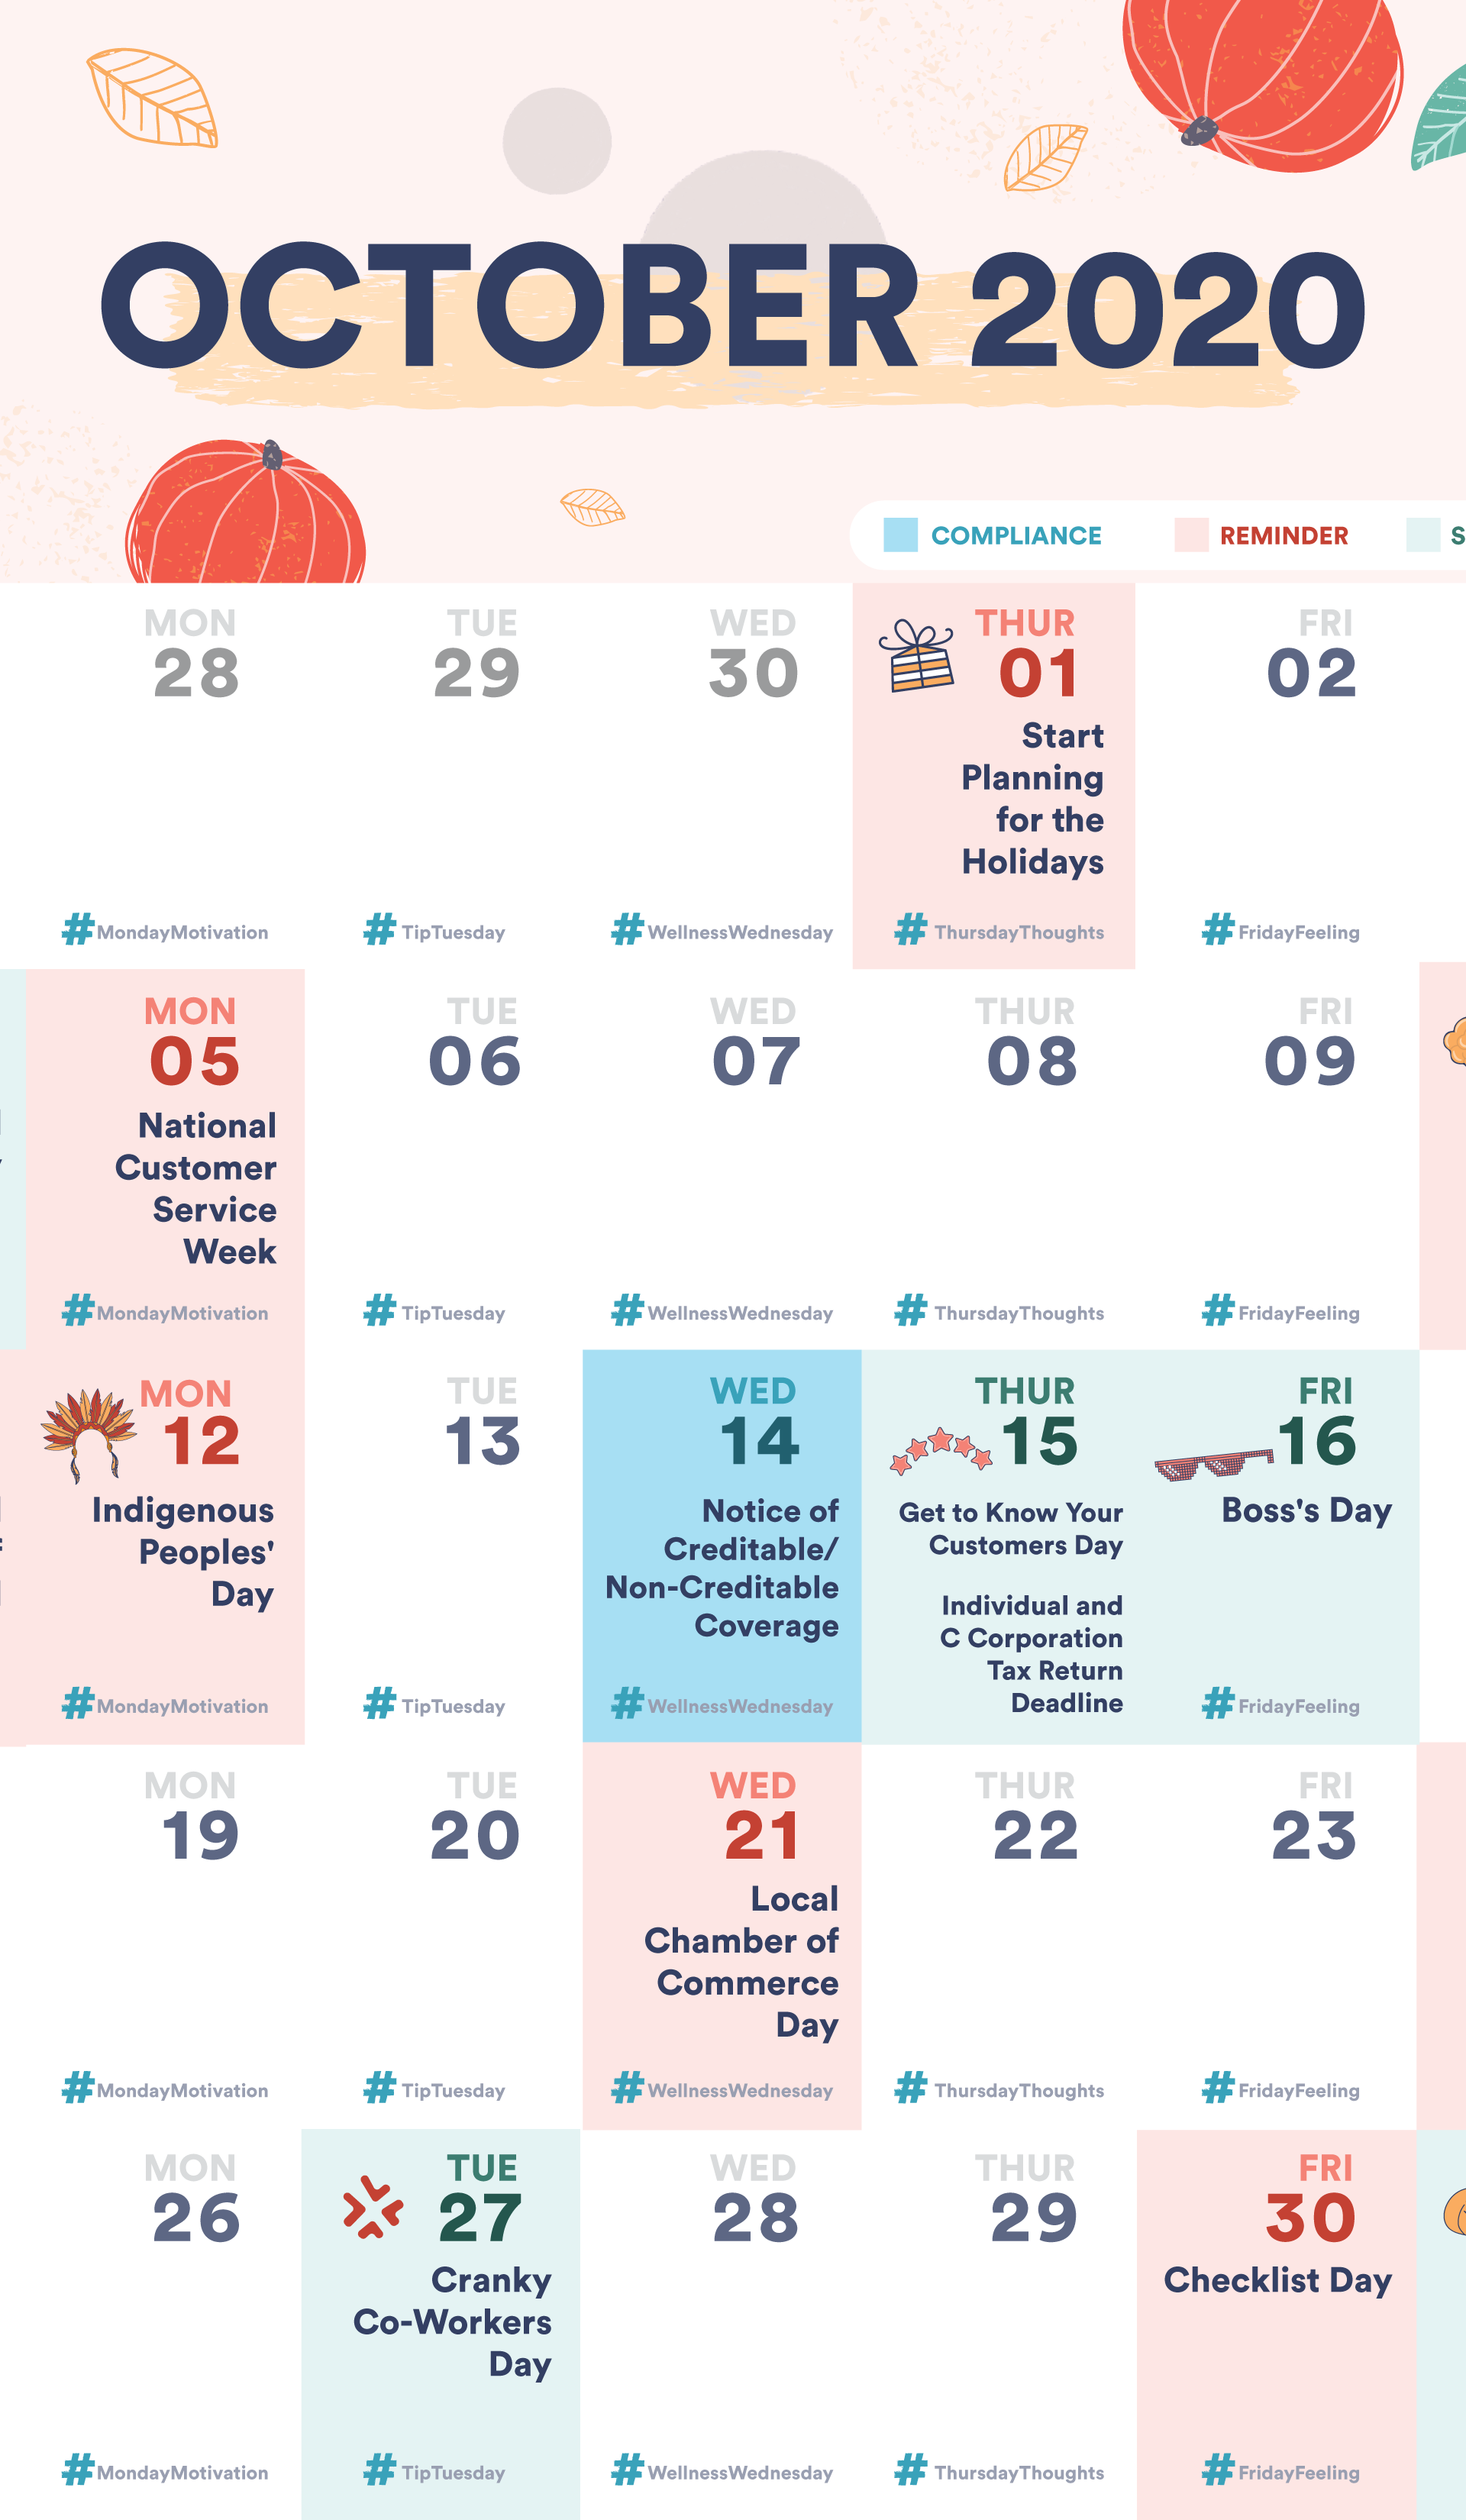 October 2020 Small Business Calendar